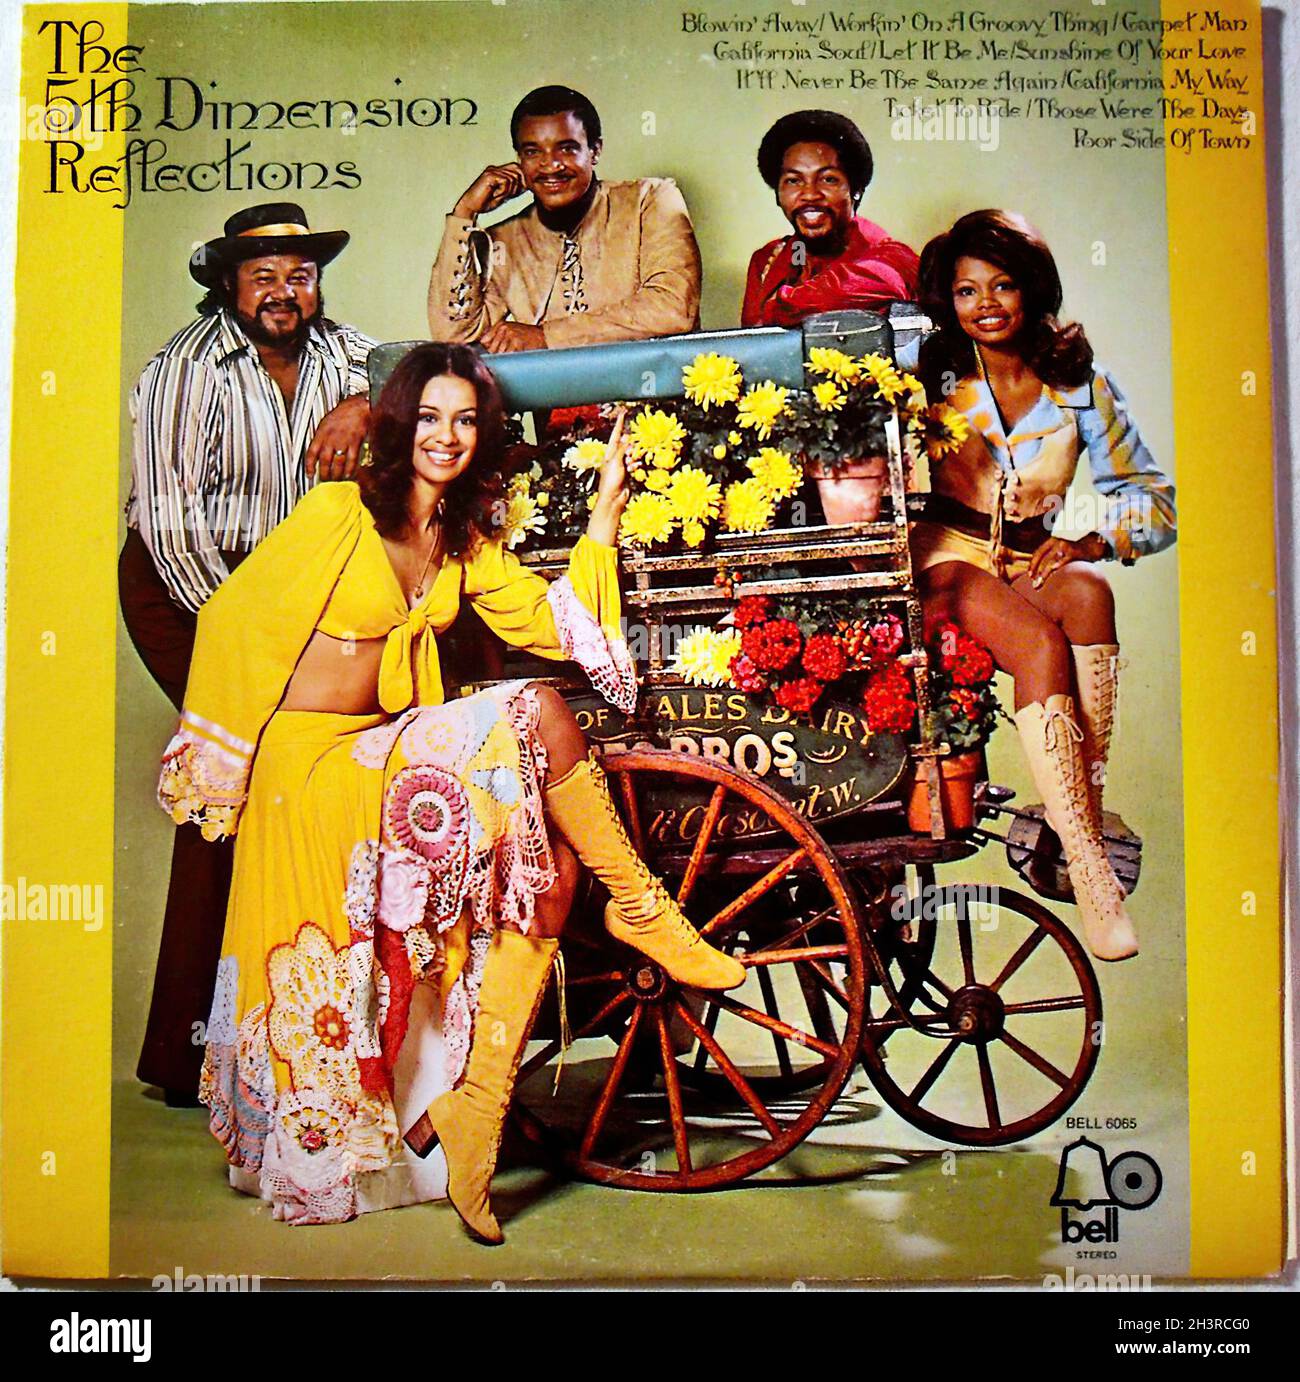 1960s  The 5th Dimension Reflections Original Vintage Vinyl Record Album Lp Stock Photo